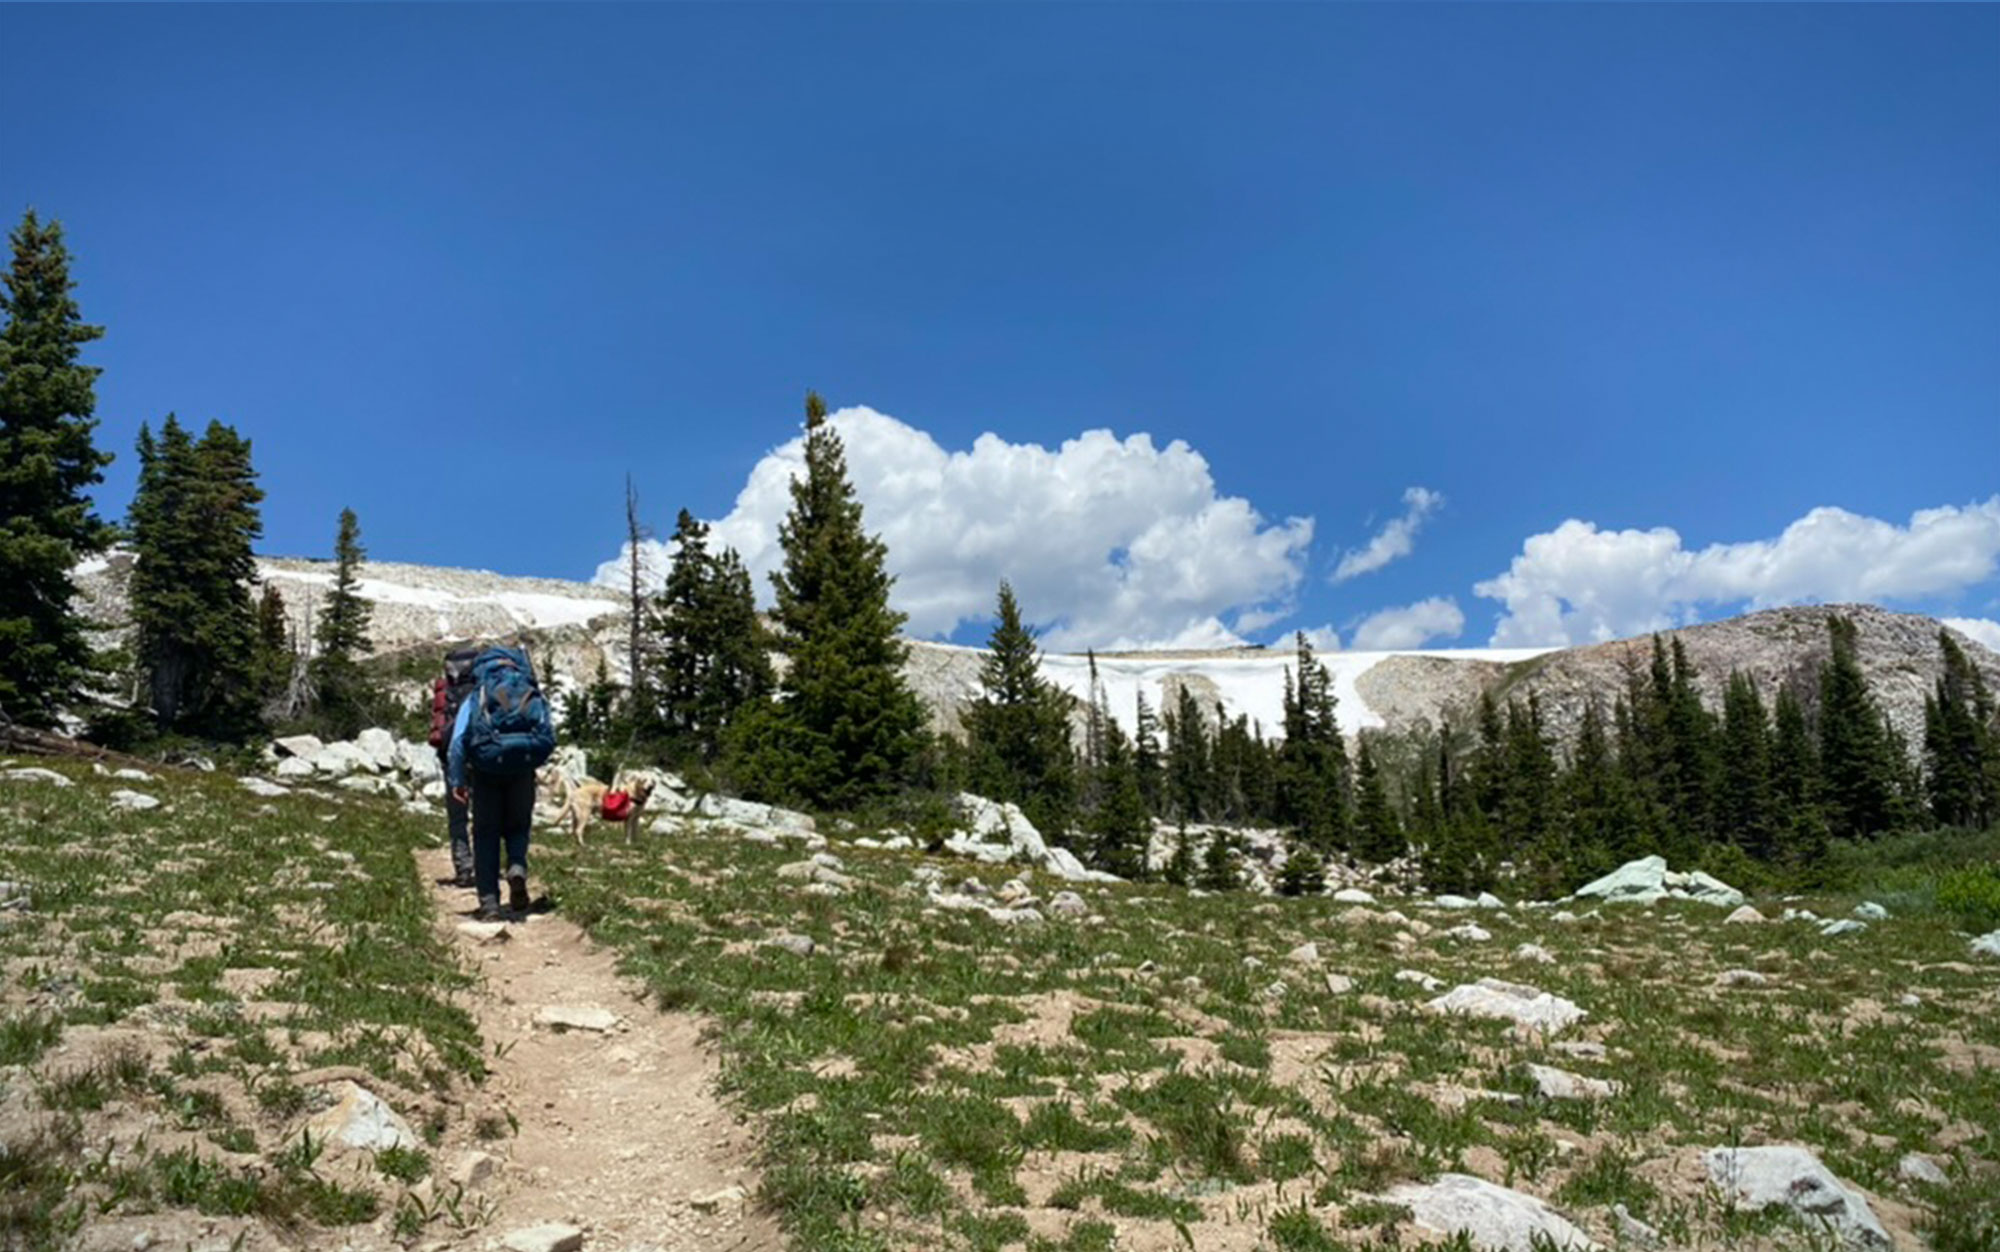 People hiking in Wyoming.